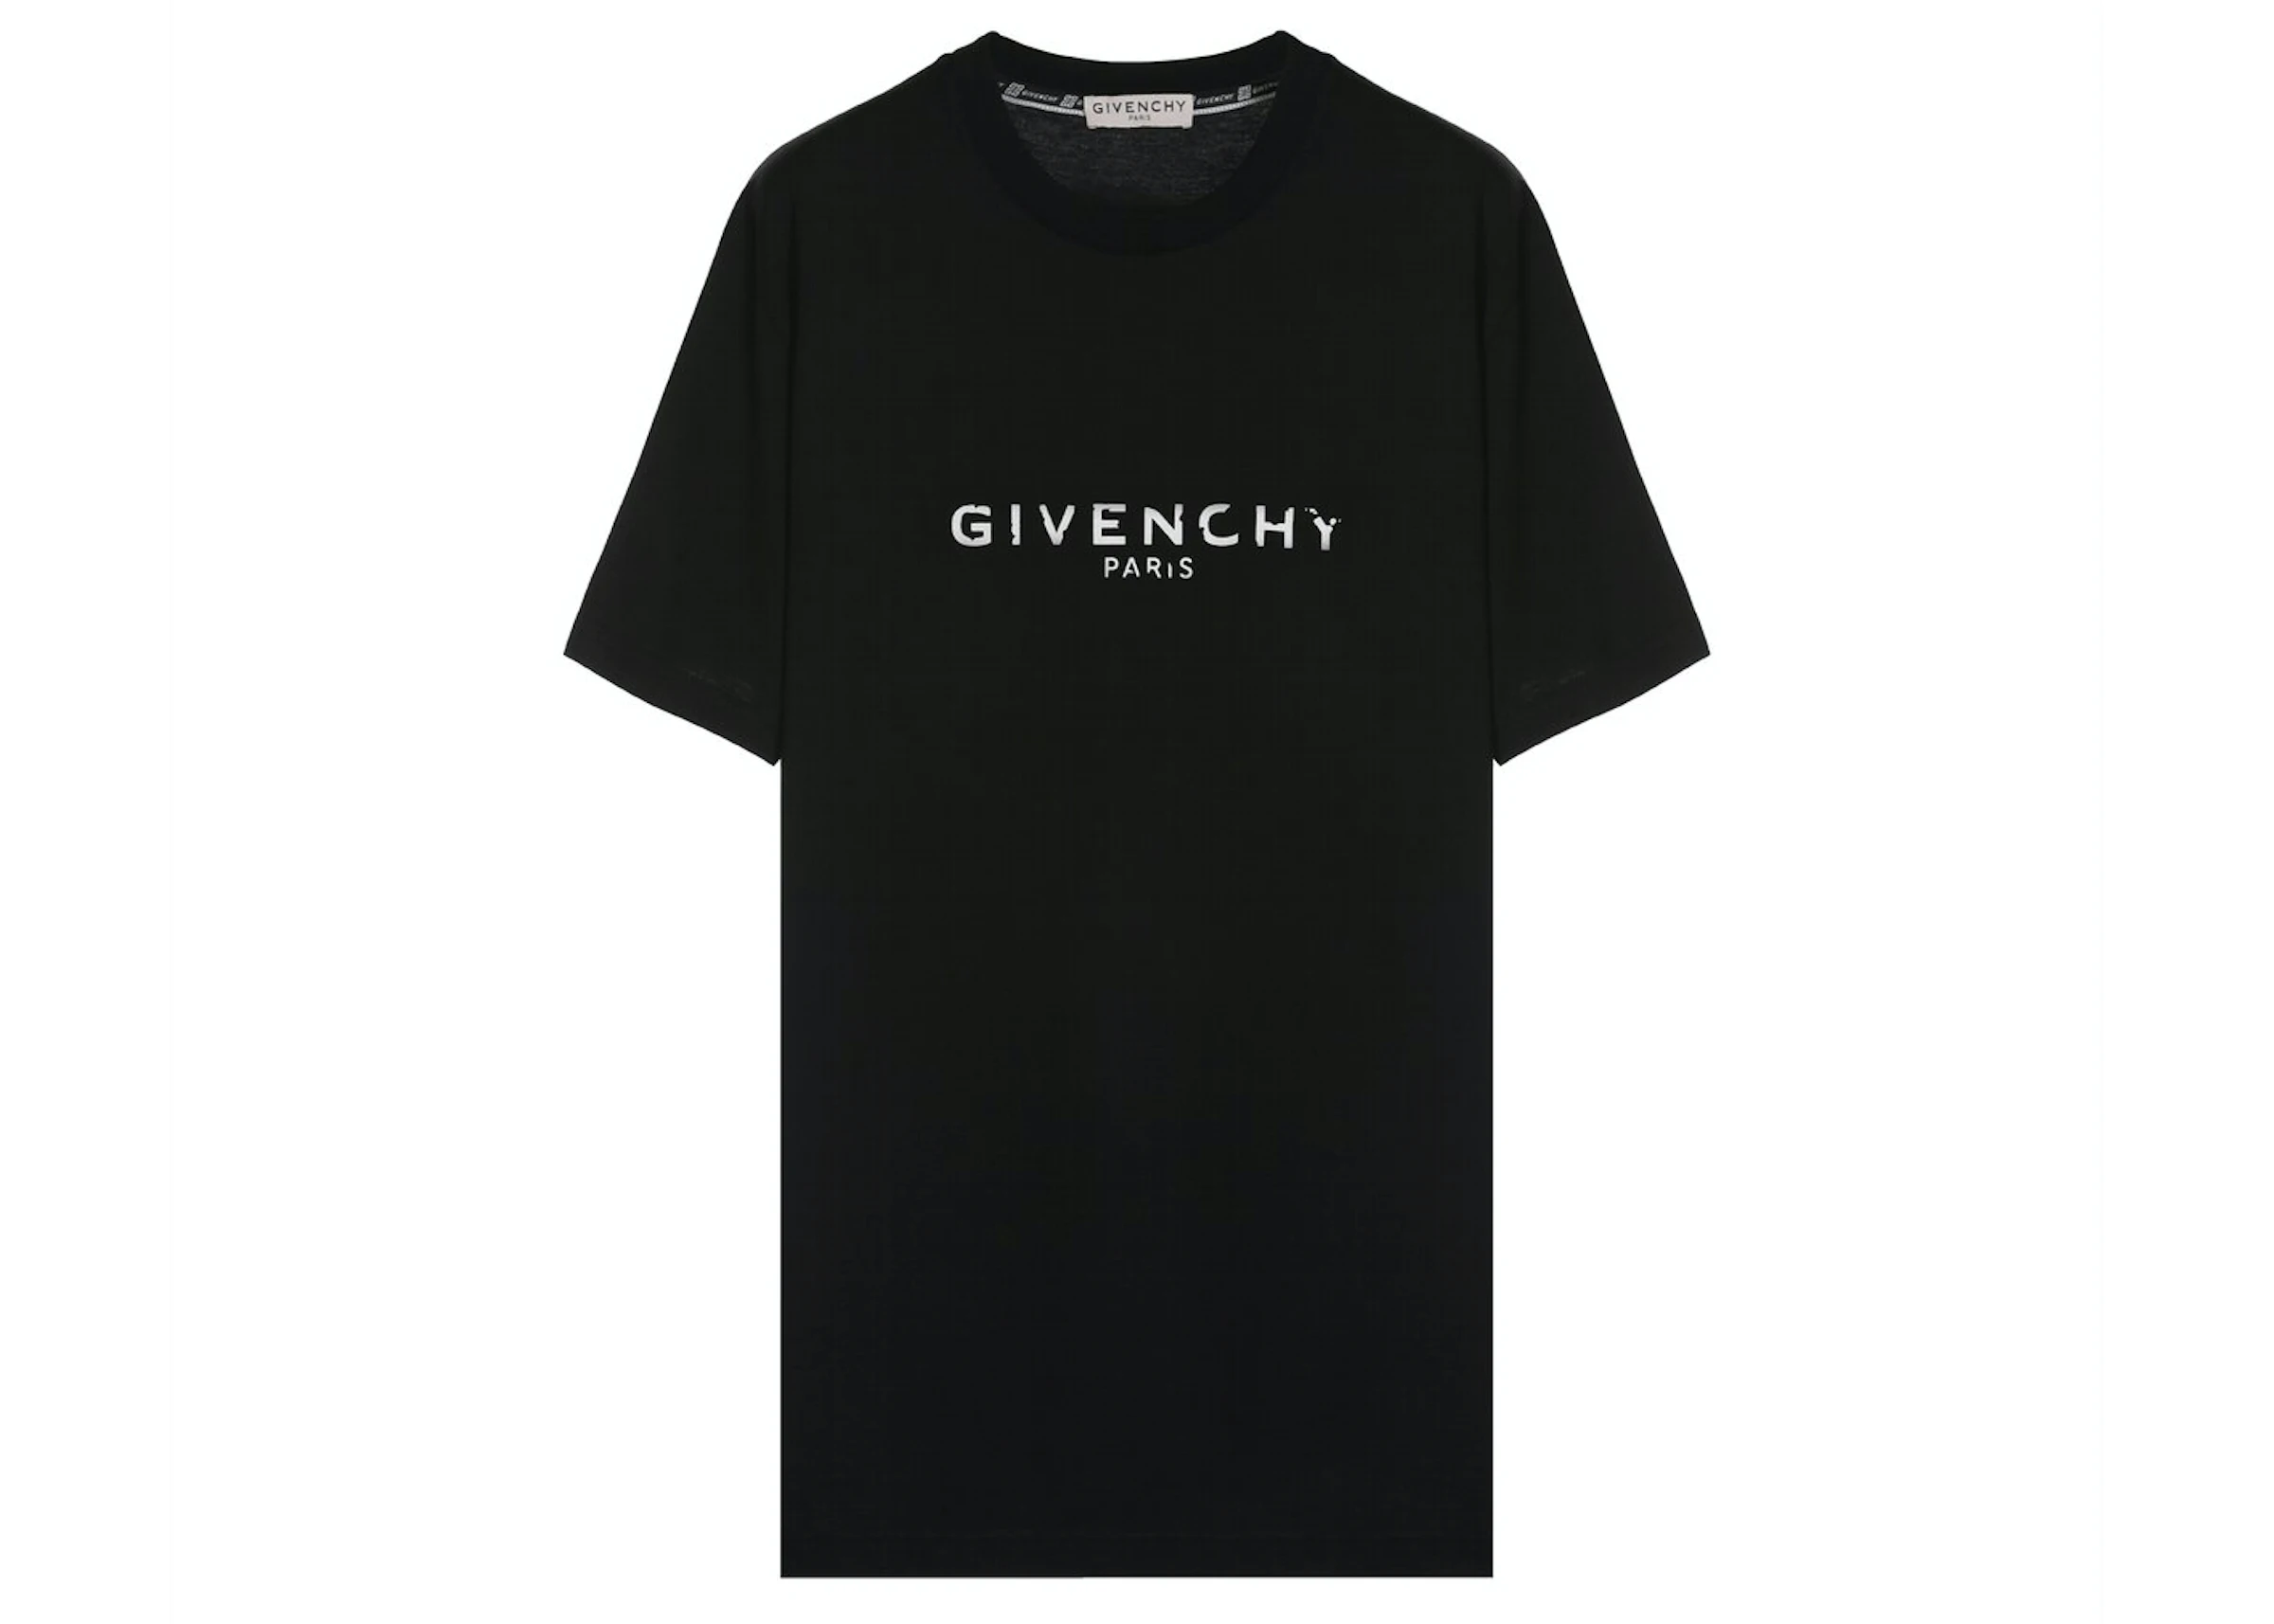 vulgaritet Mammoth automat Givenchy Paris Oversized T-shirt Black - SS21 - US